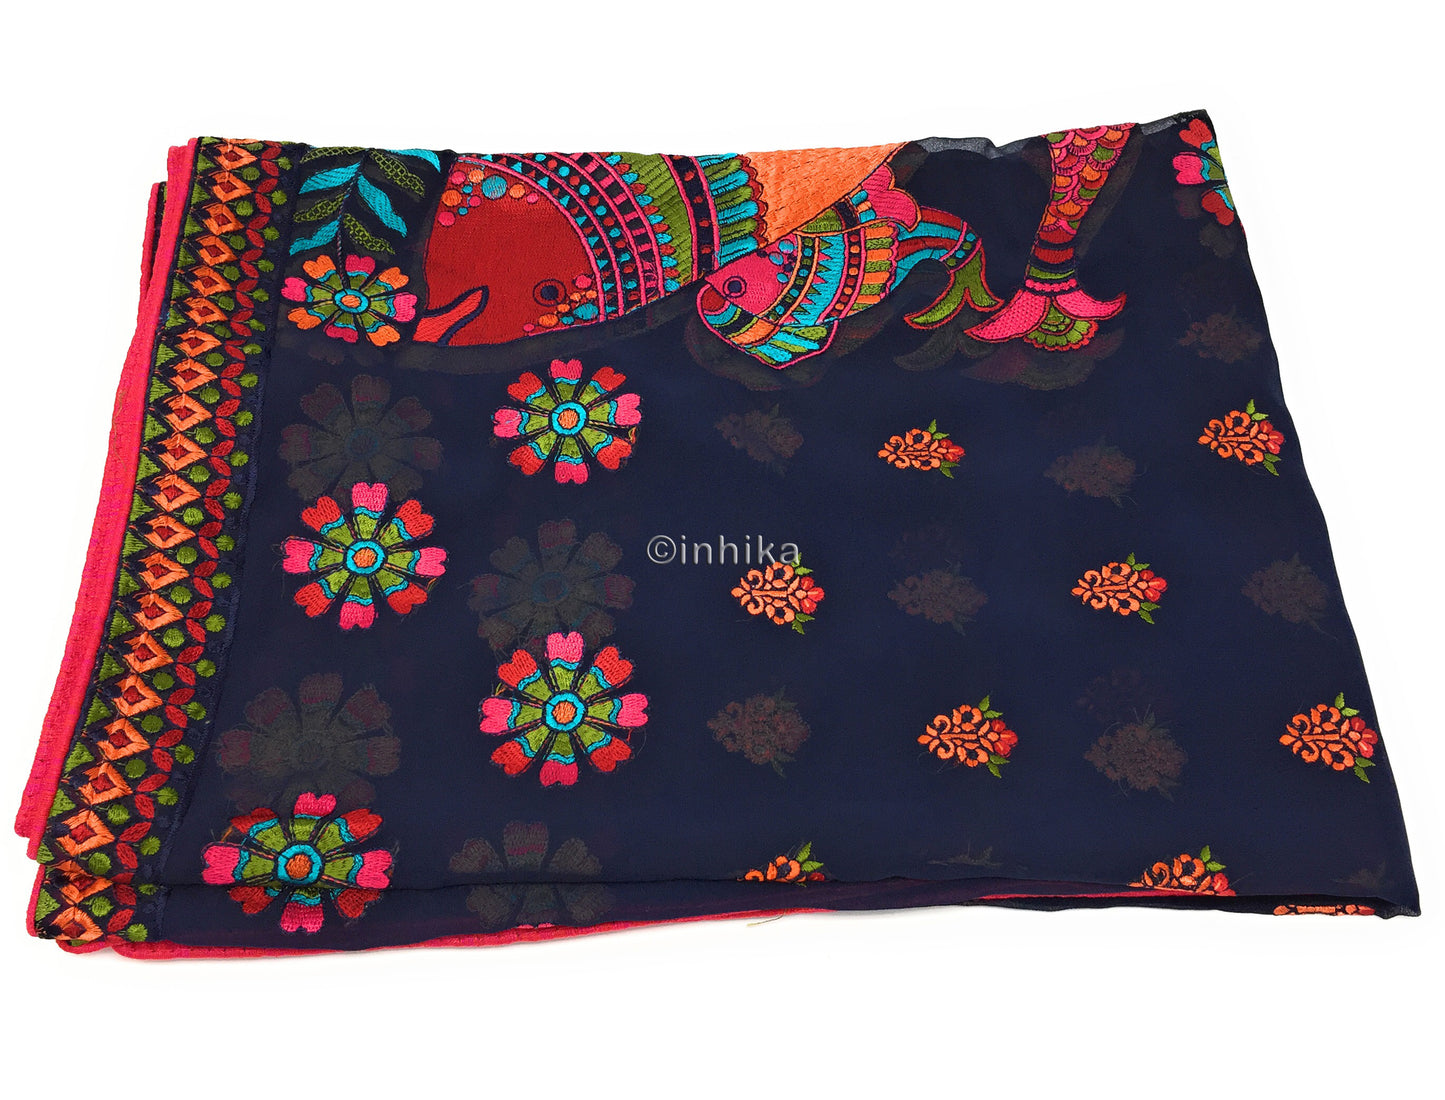 Designer Dupatta from India, Multicolour Fish Embroidery